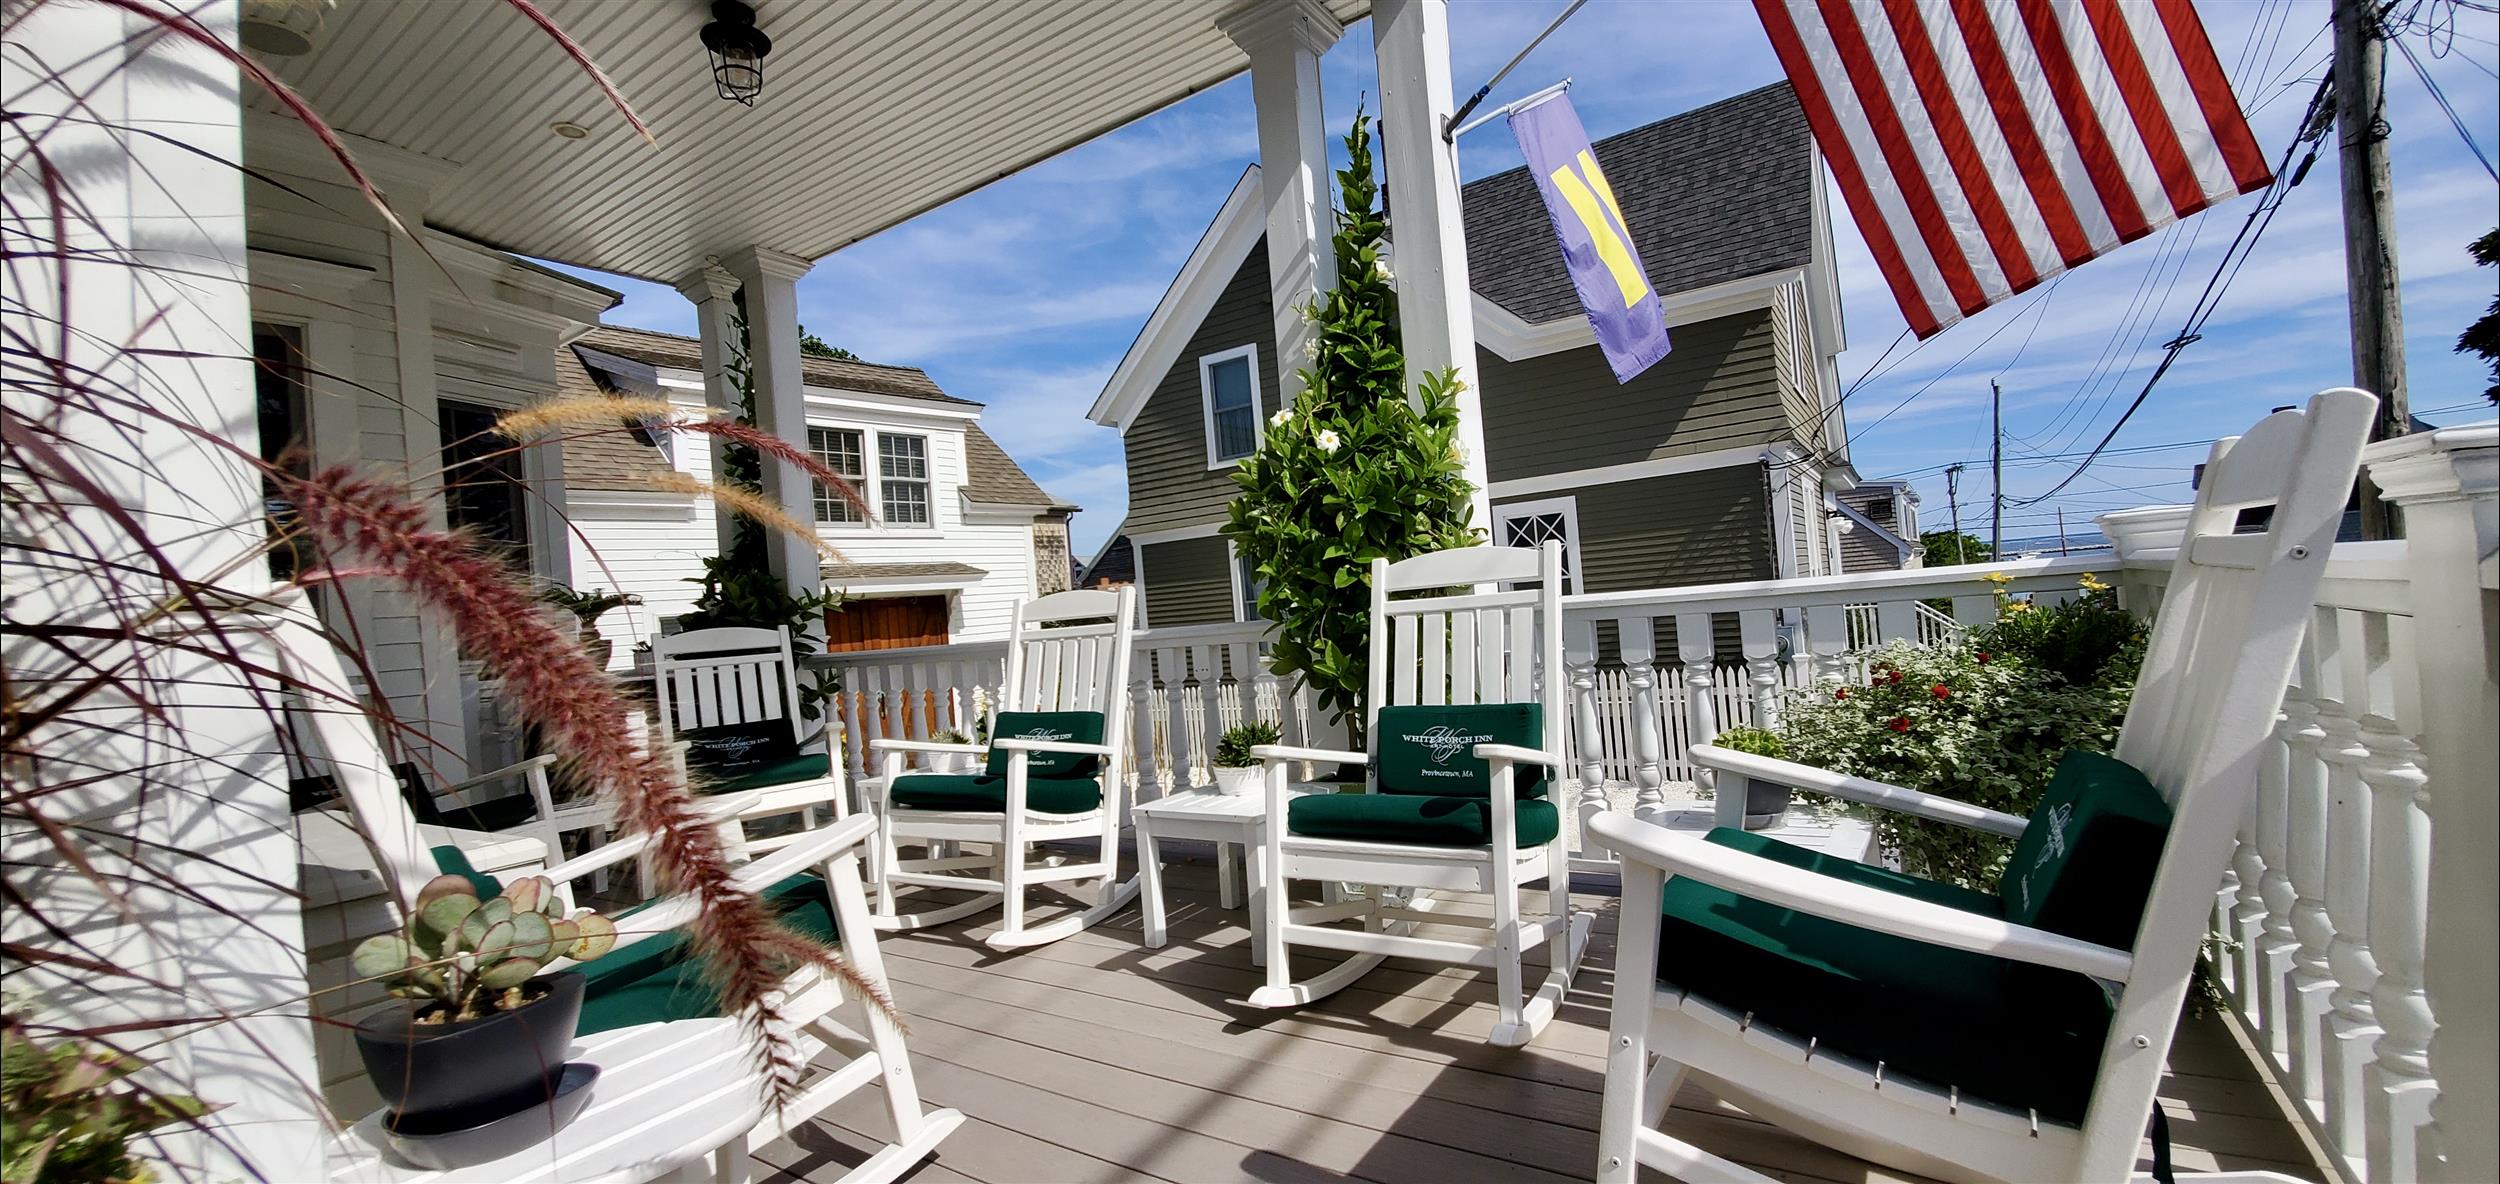 Enjoy the porch at the White Porch Inn